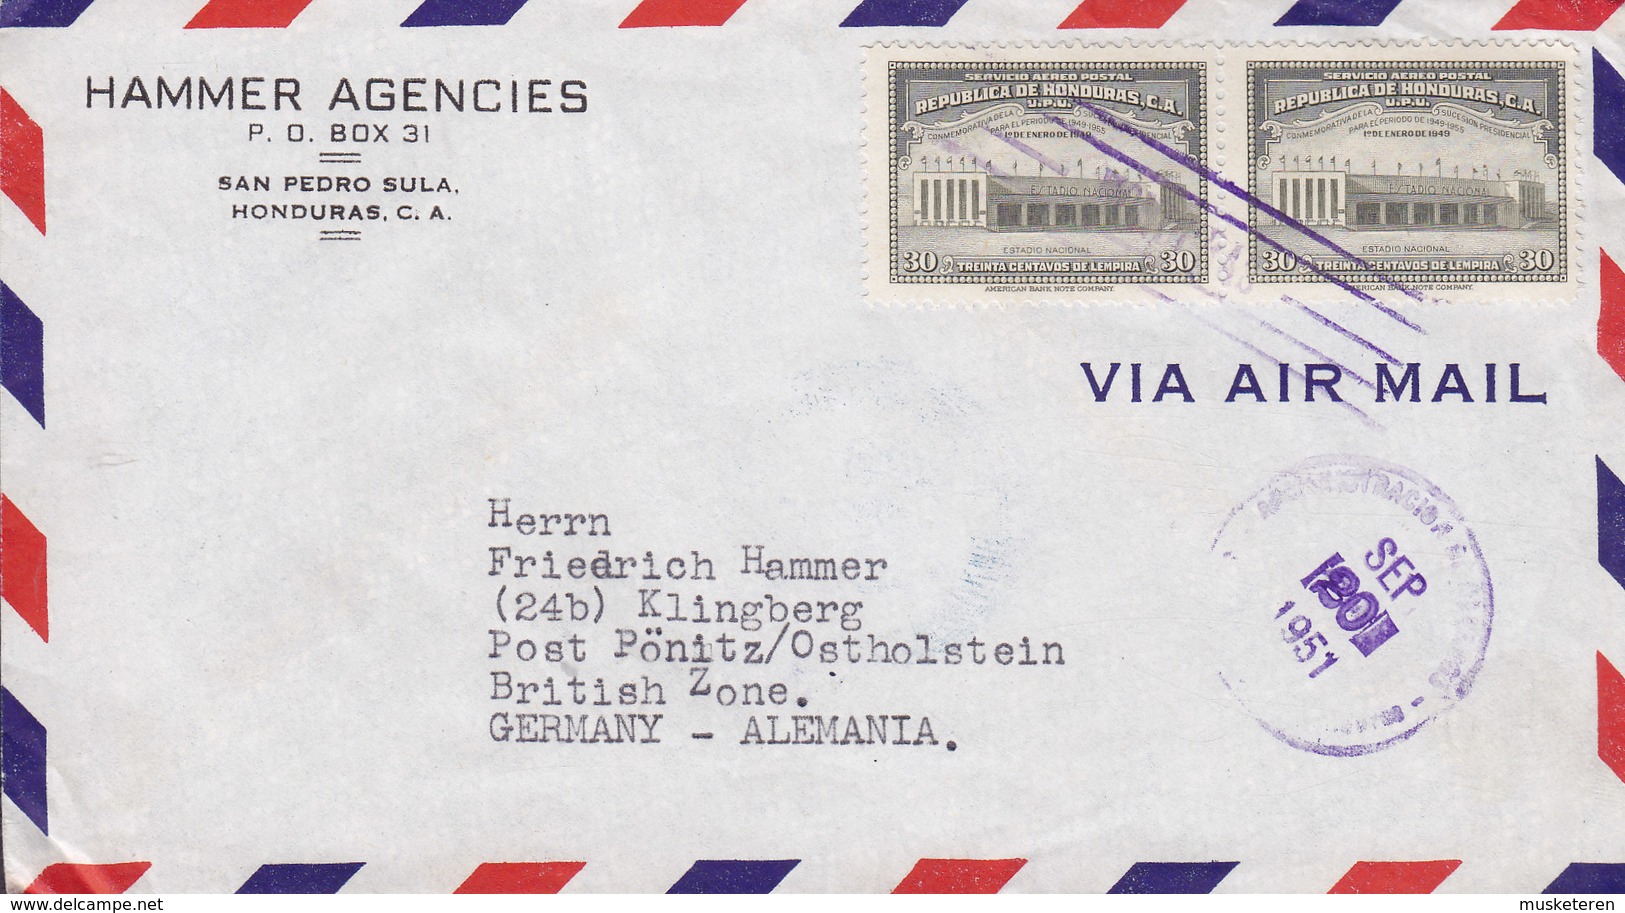 Honduras HAMMER AGENCIES, SAN PEDRO SULA 'Servicio Postal Nocturno 1951 Cover Letra PÖNITZ Ostholstein British Zone - Honduras